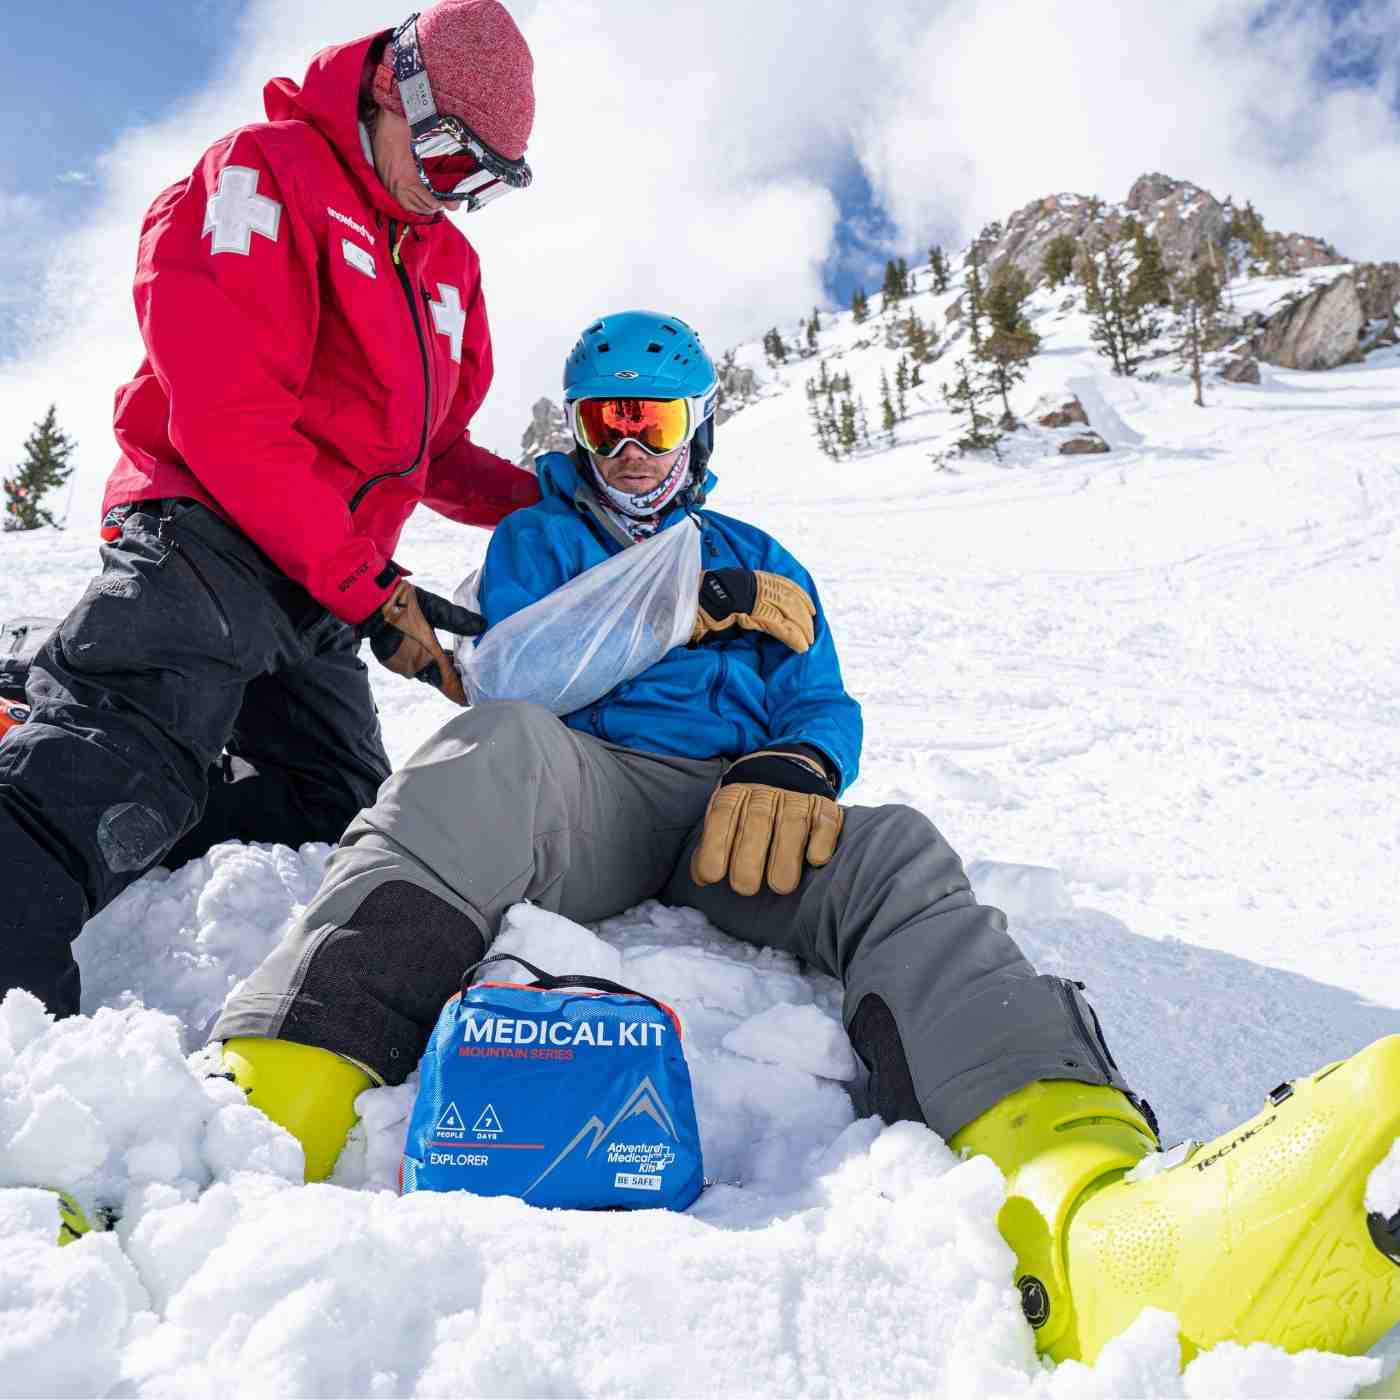 Mountain Series Medical Kit - Explorer Ski Patrol tending to broken arm with kit in front on snow